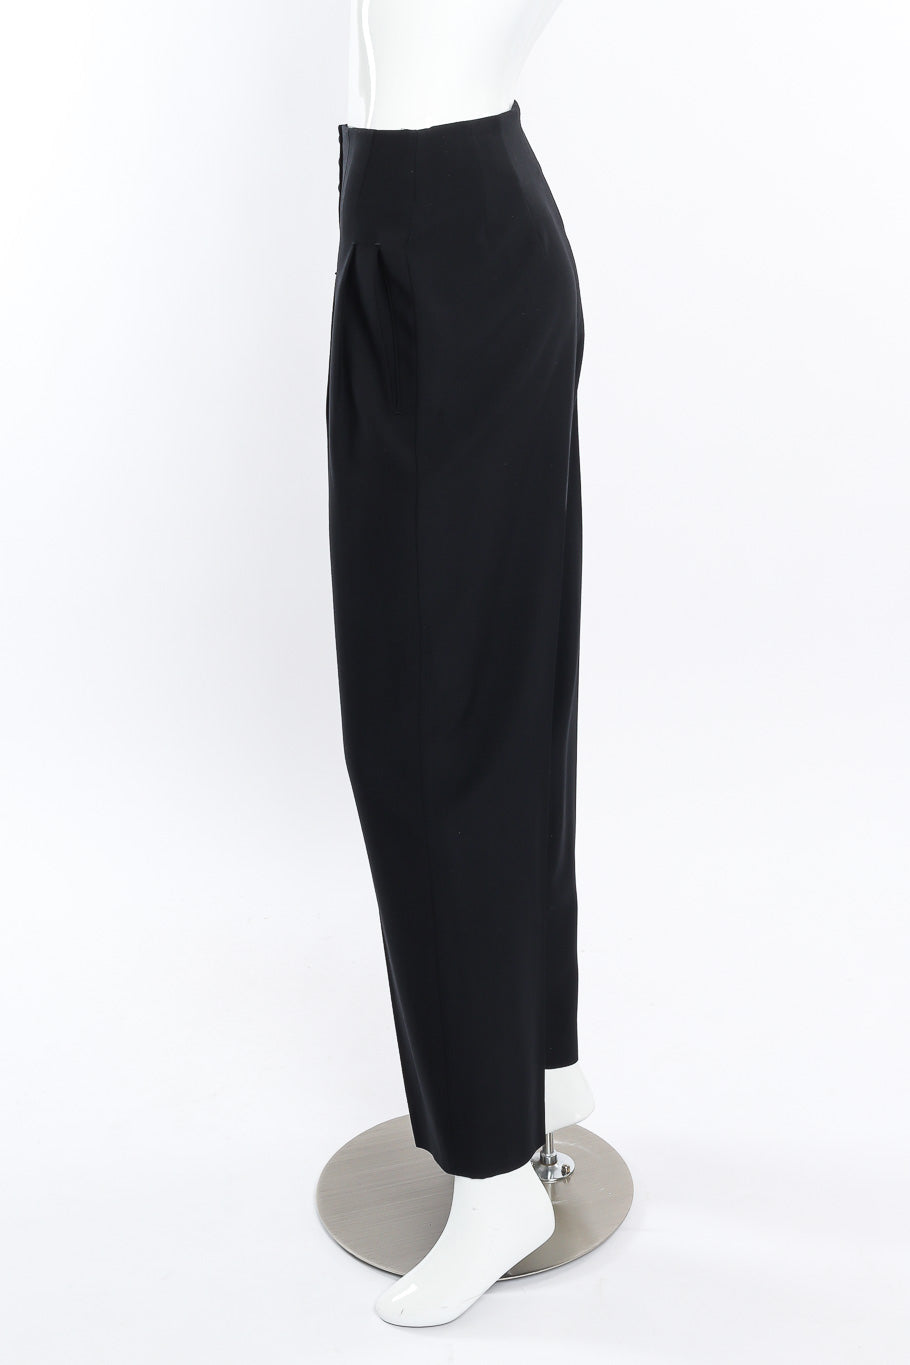 Vintage Richard Tyler Tuxedo Pant Suit side view of pant on mannequin @Recessla